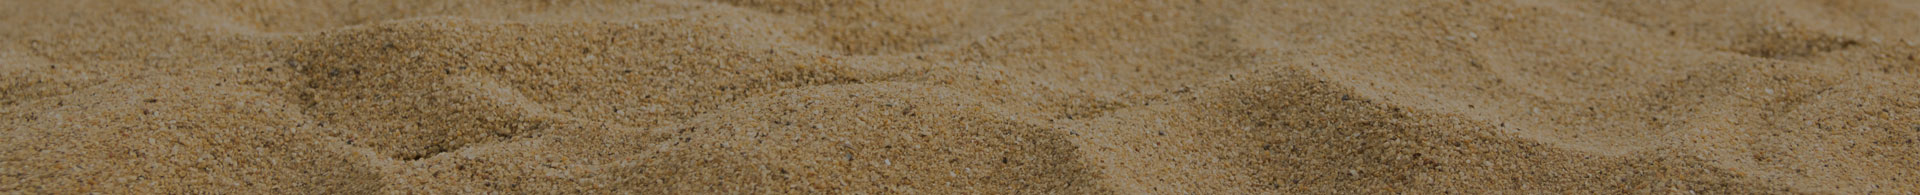 Polymeric Sand